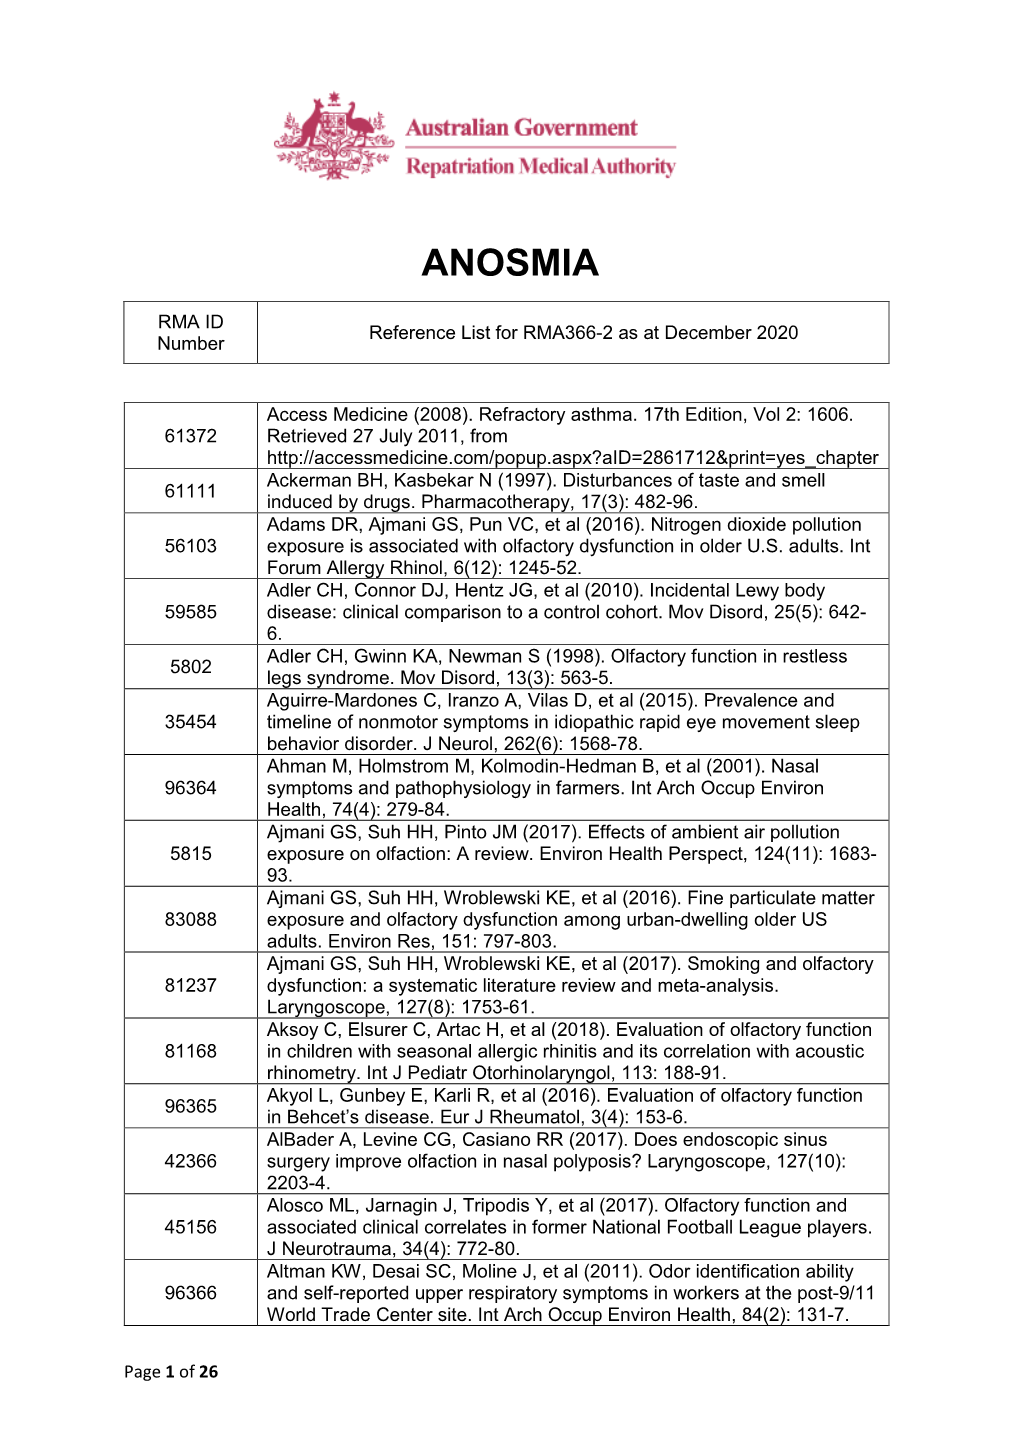 Reference List Concerning Anosmia